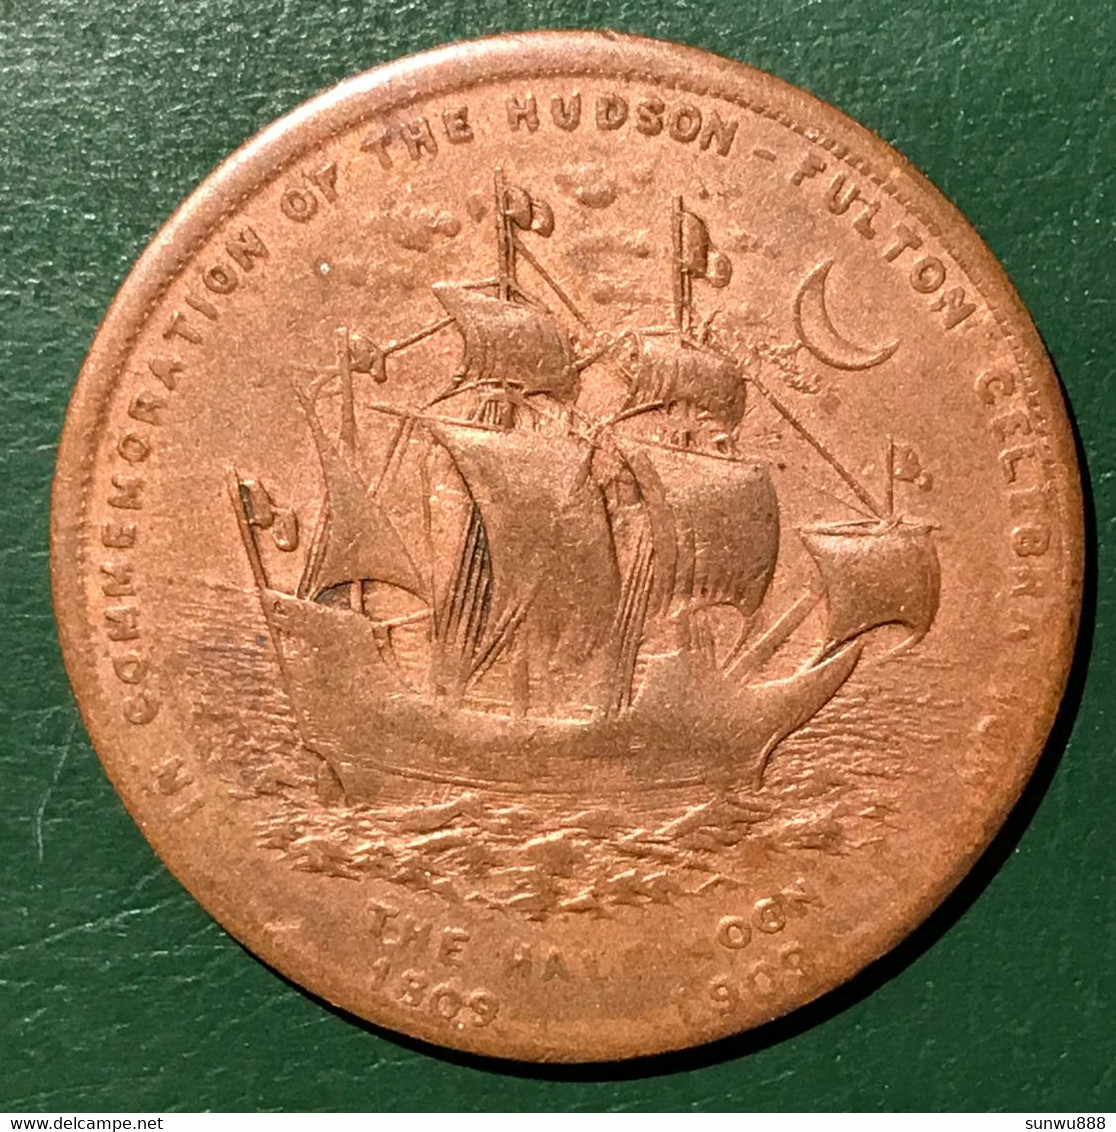 Hudson Fulton Celebration The Half Moon 1609-1909 New York Boat Medal Token RARE (fixed Price) - Professionnels/De Société